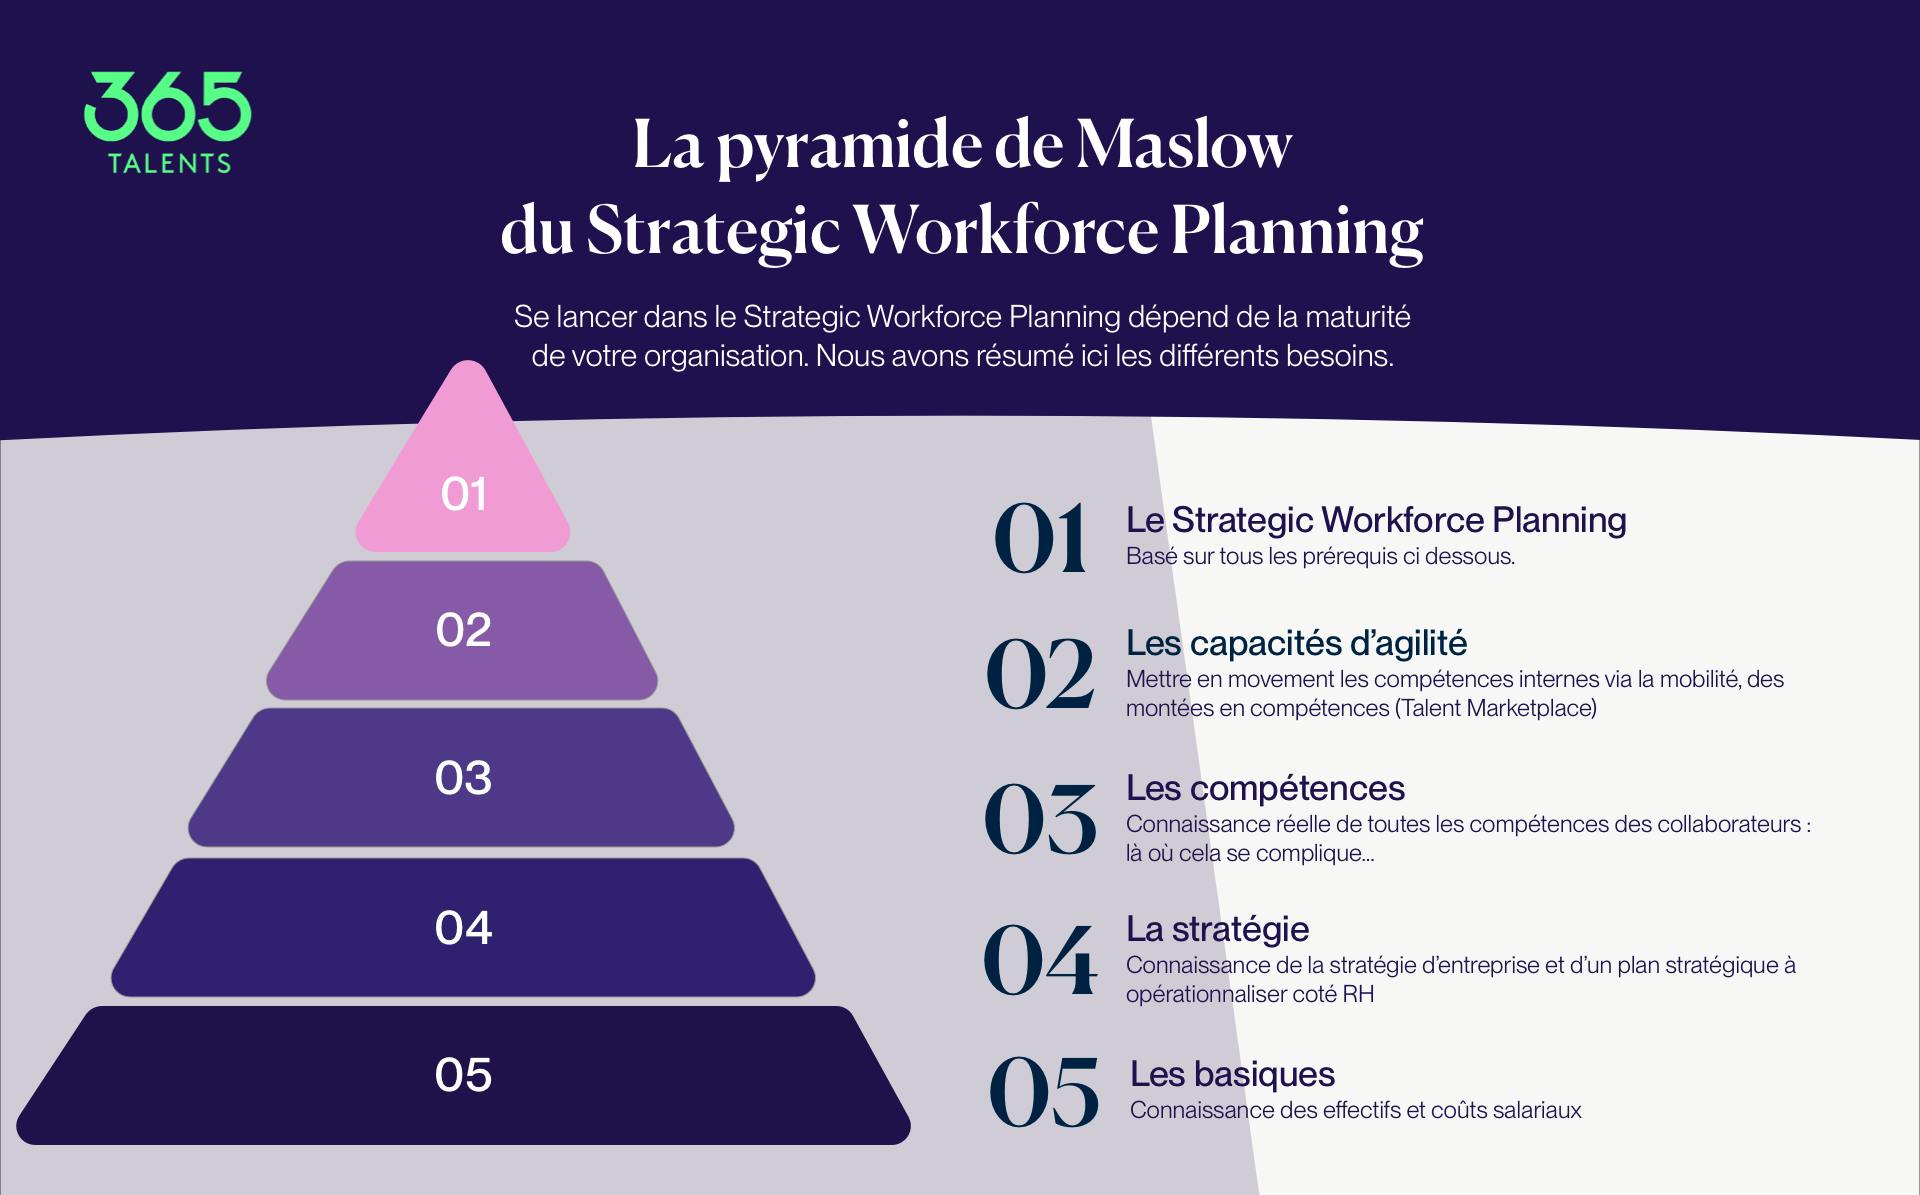 La pyramide de Maslow du Strategic Workforce Planning